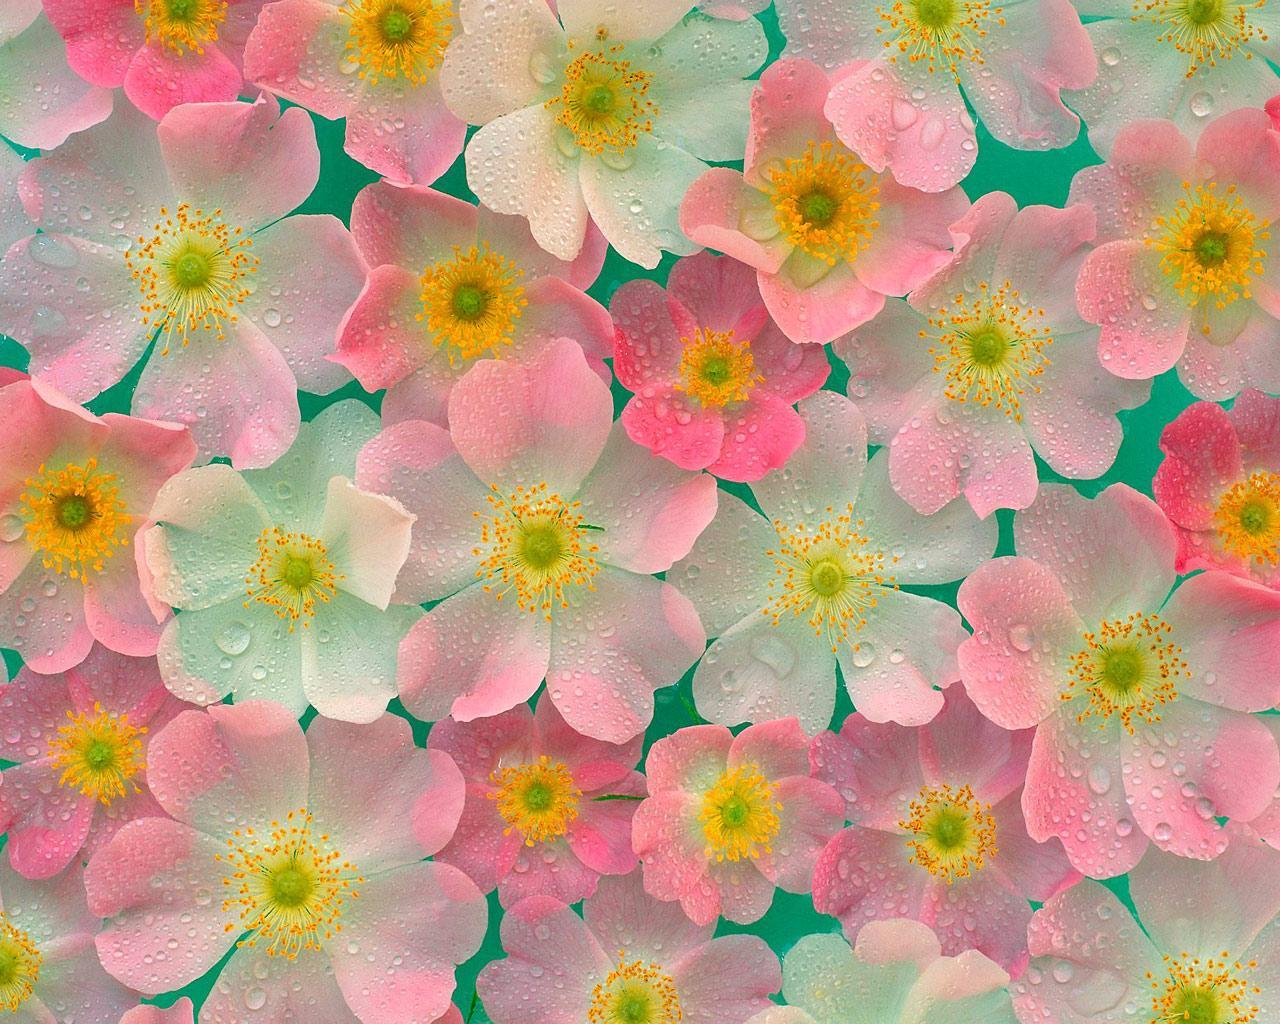 8k Flowers Images